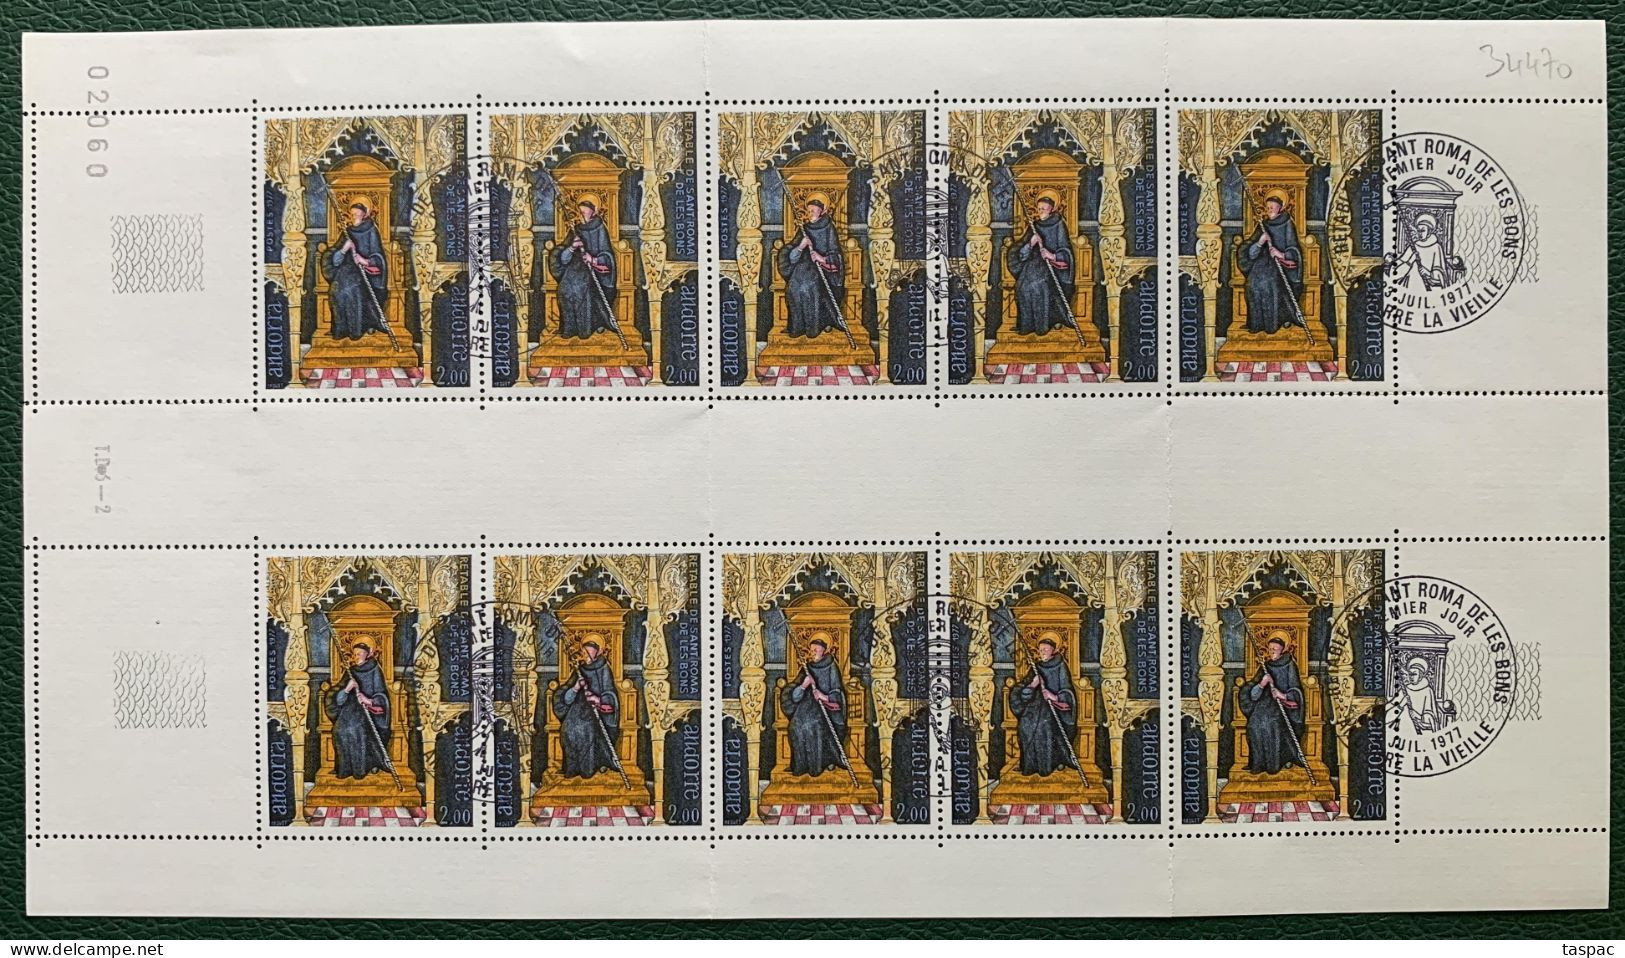 French Andorra 1977 Mi# 285 Klb. Used - Sheet Of 10 (folded) - Paintings / St. Romanus Of Caesarea - Used Stamps